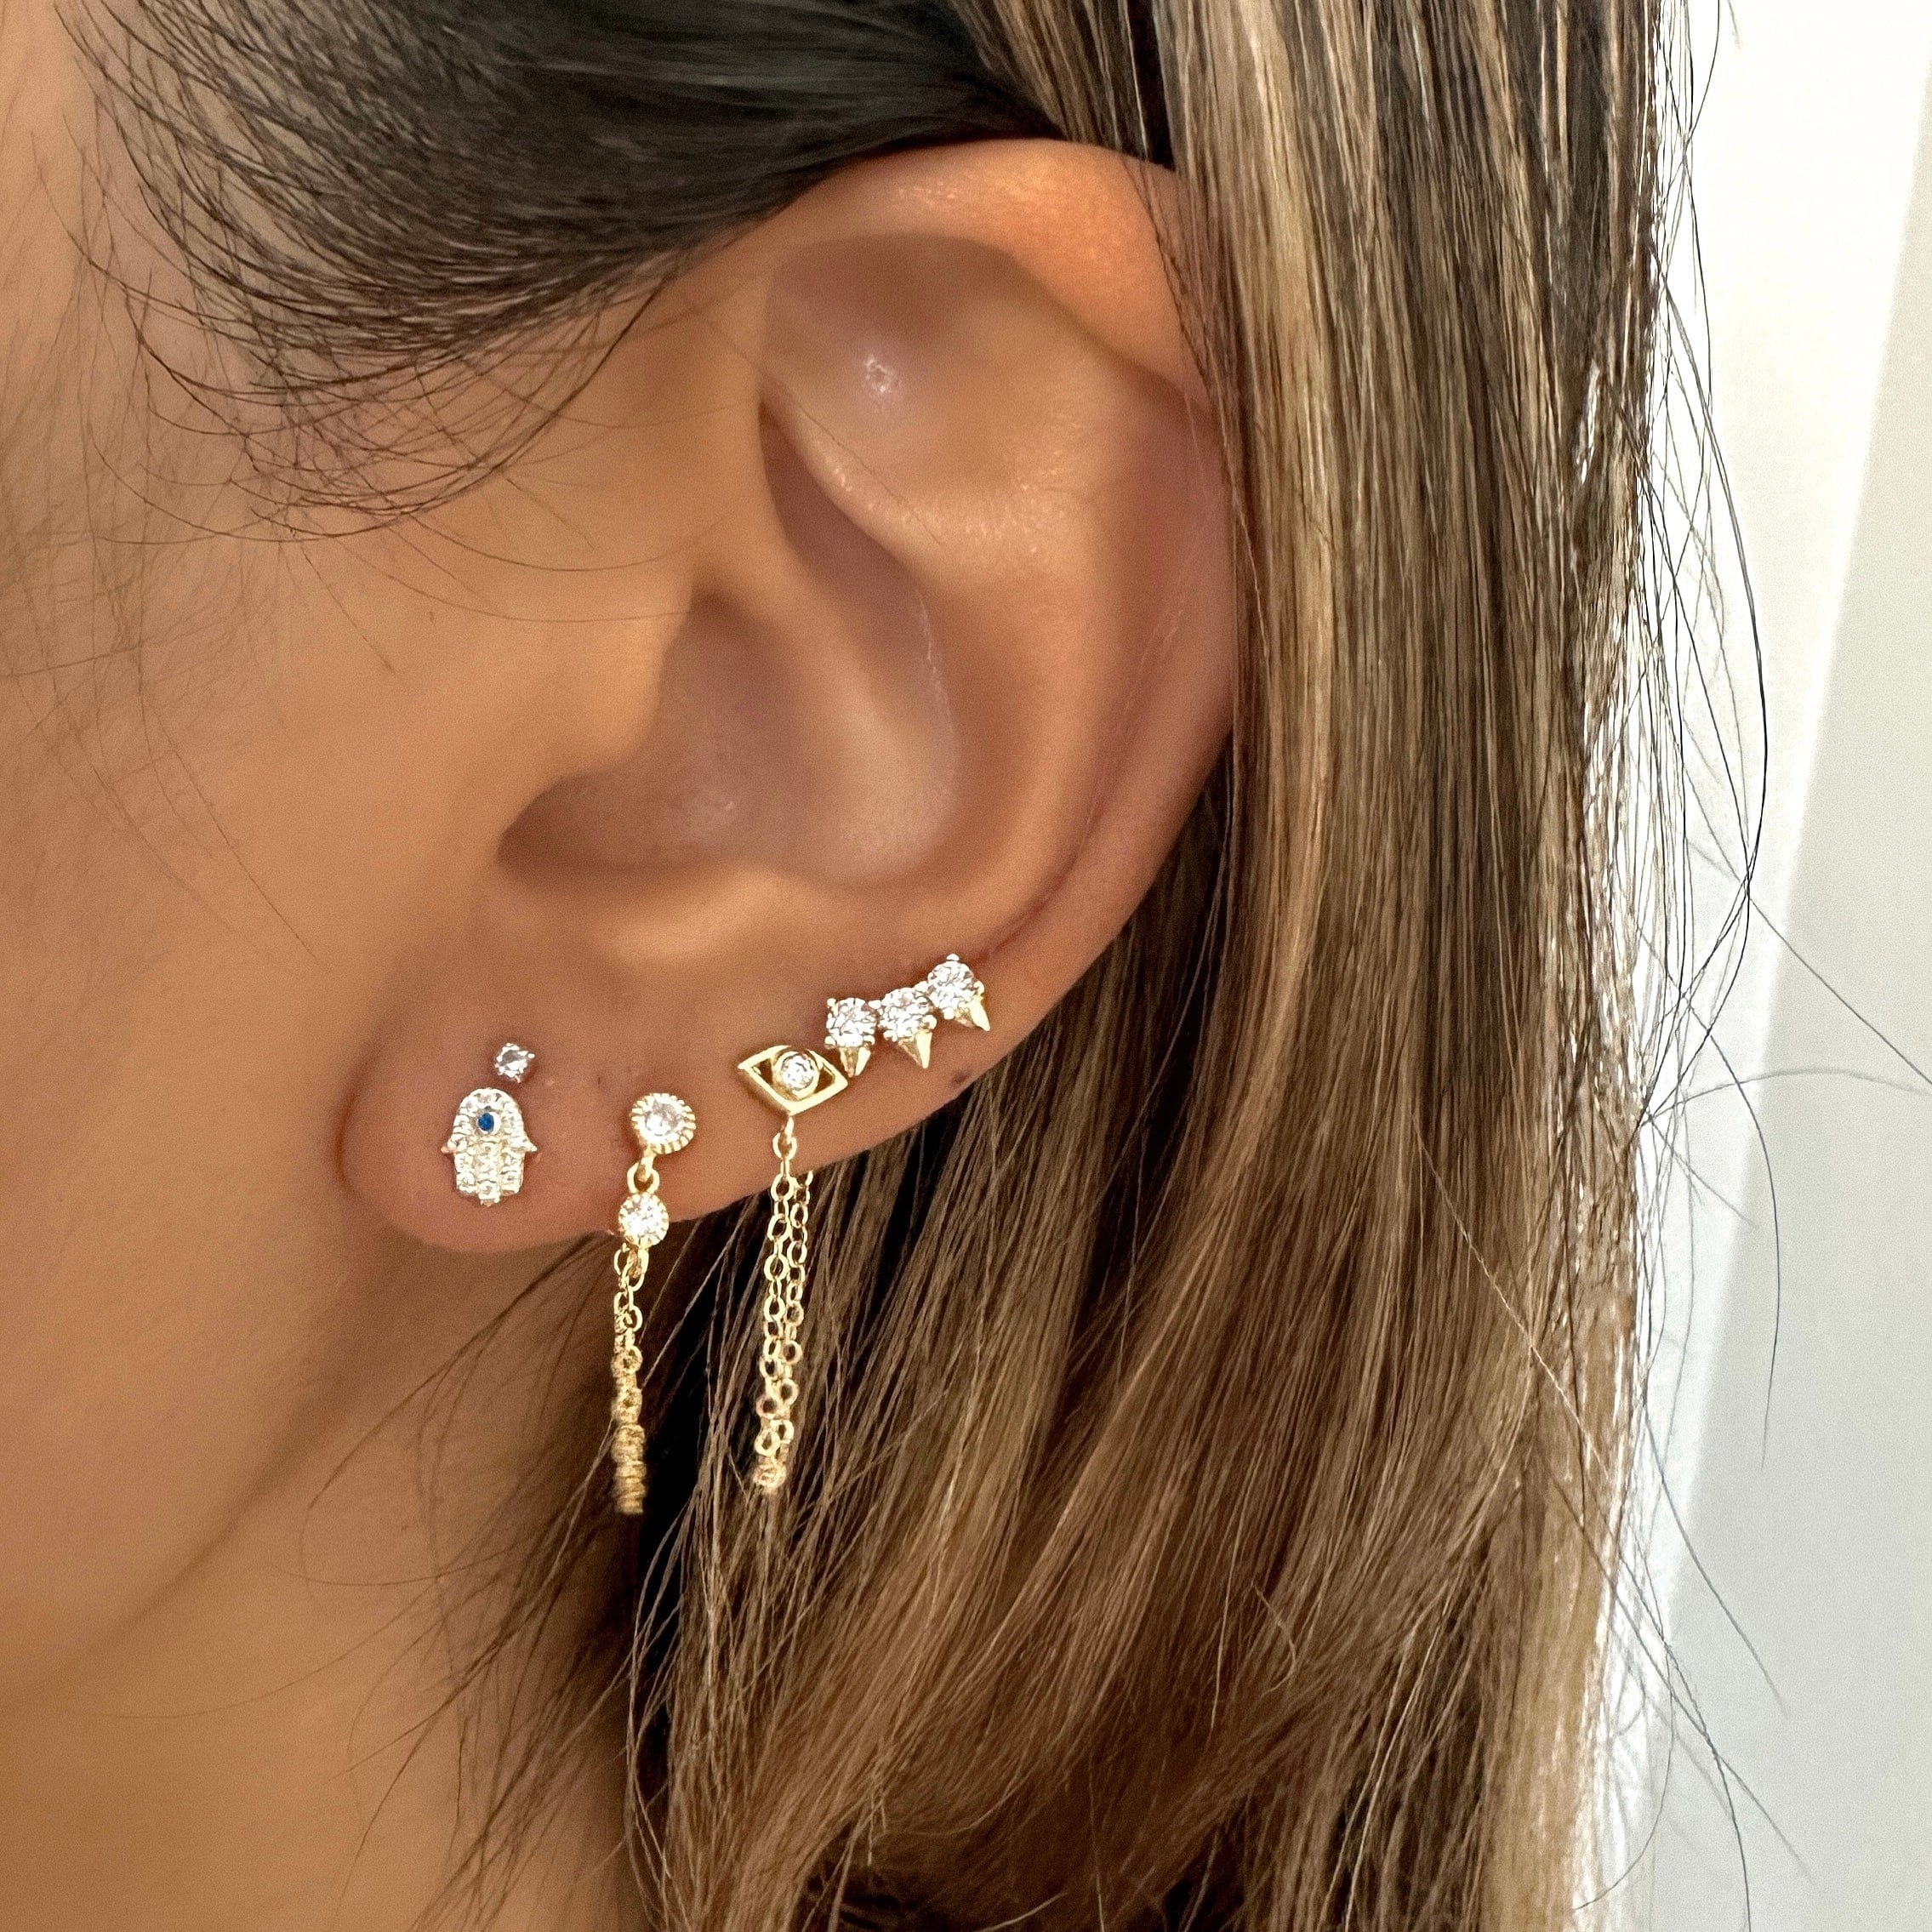 LE sensor earrings London Earrings